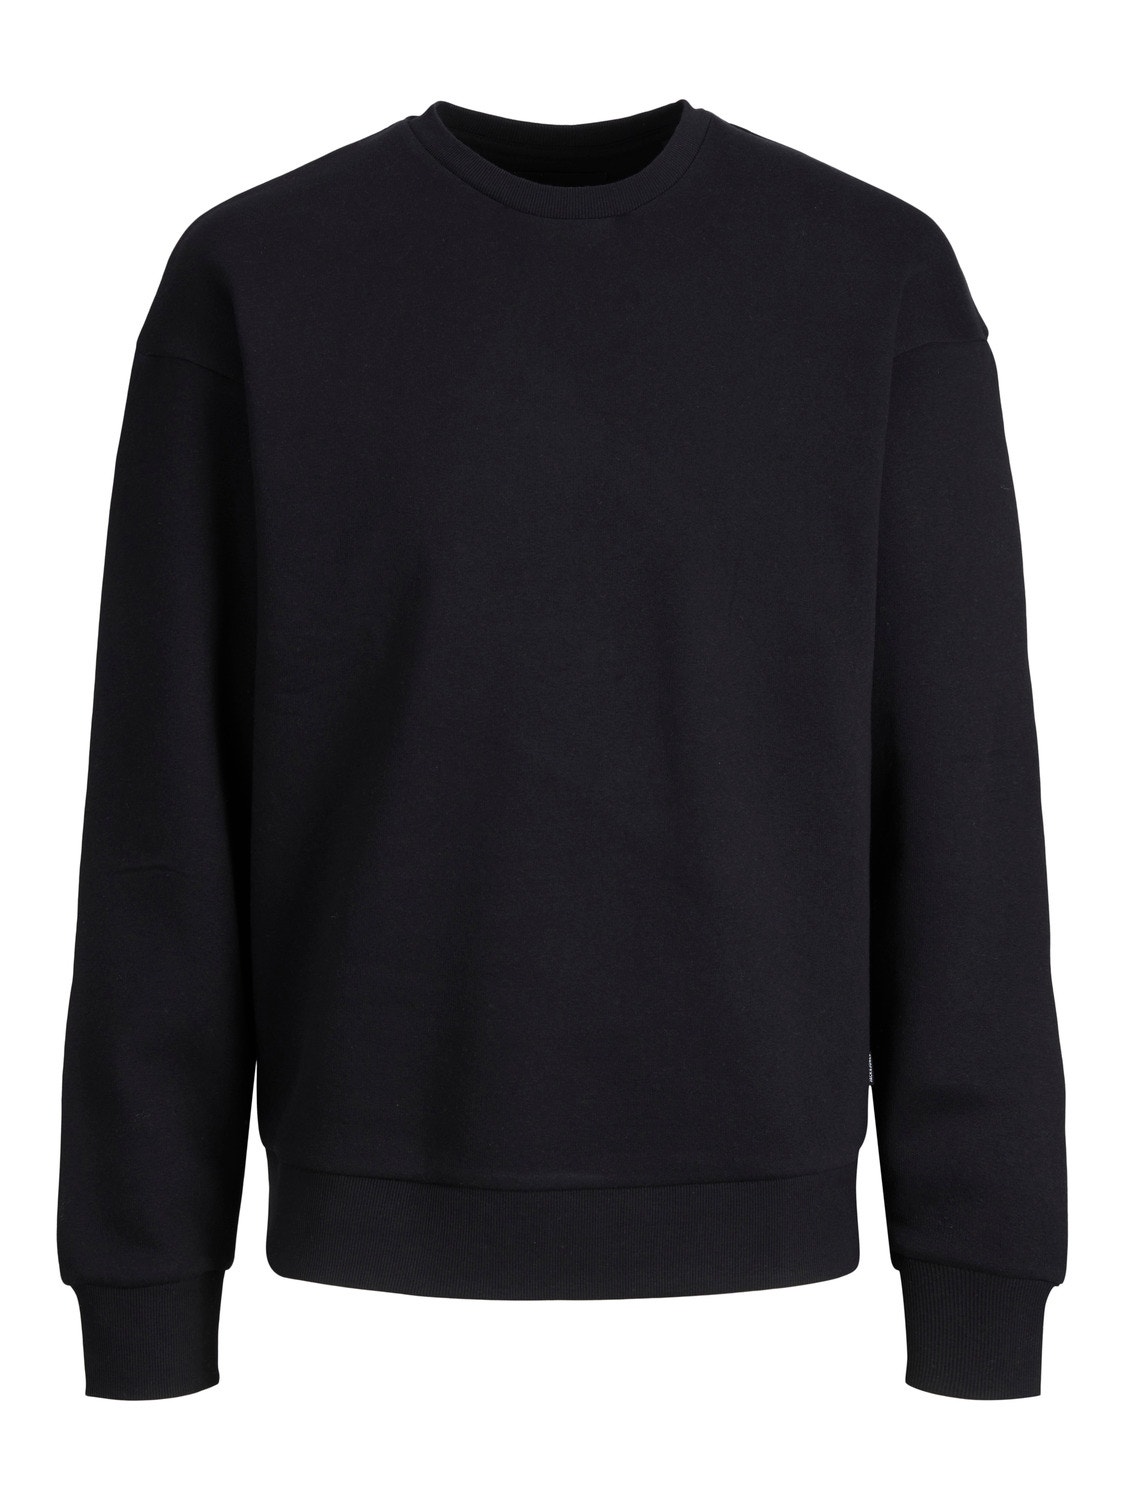 Jack & Jones Plus Size Ensfarvet Sweatshirt med rund hals -Black - 12250594